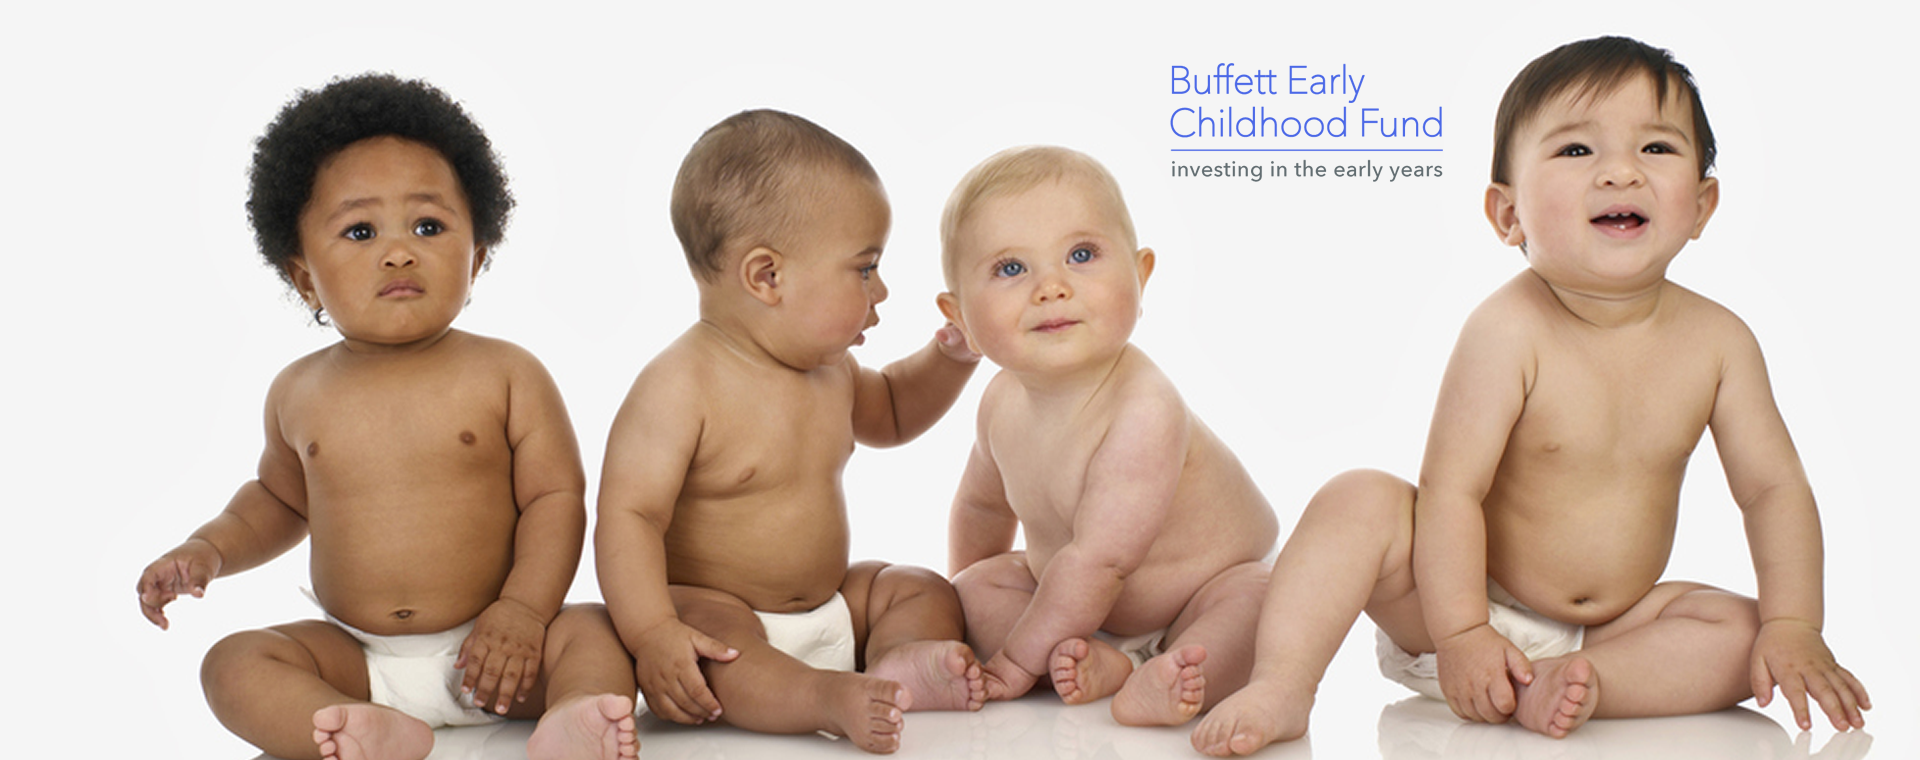 Buffett Early Childhood Fund